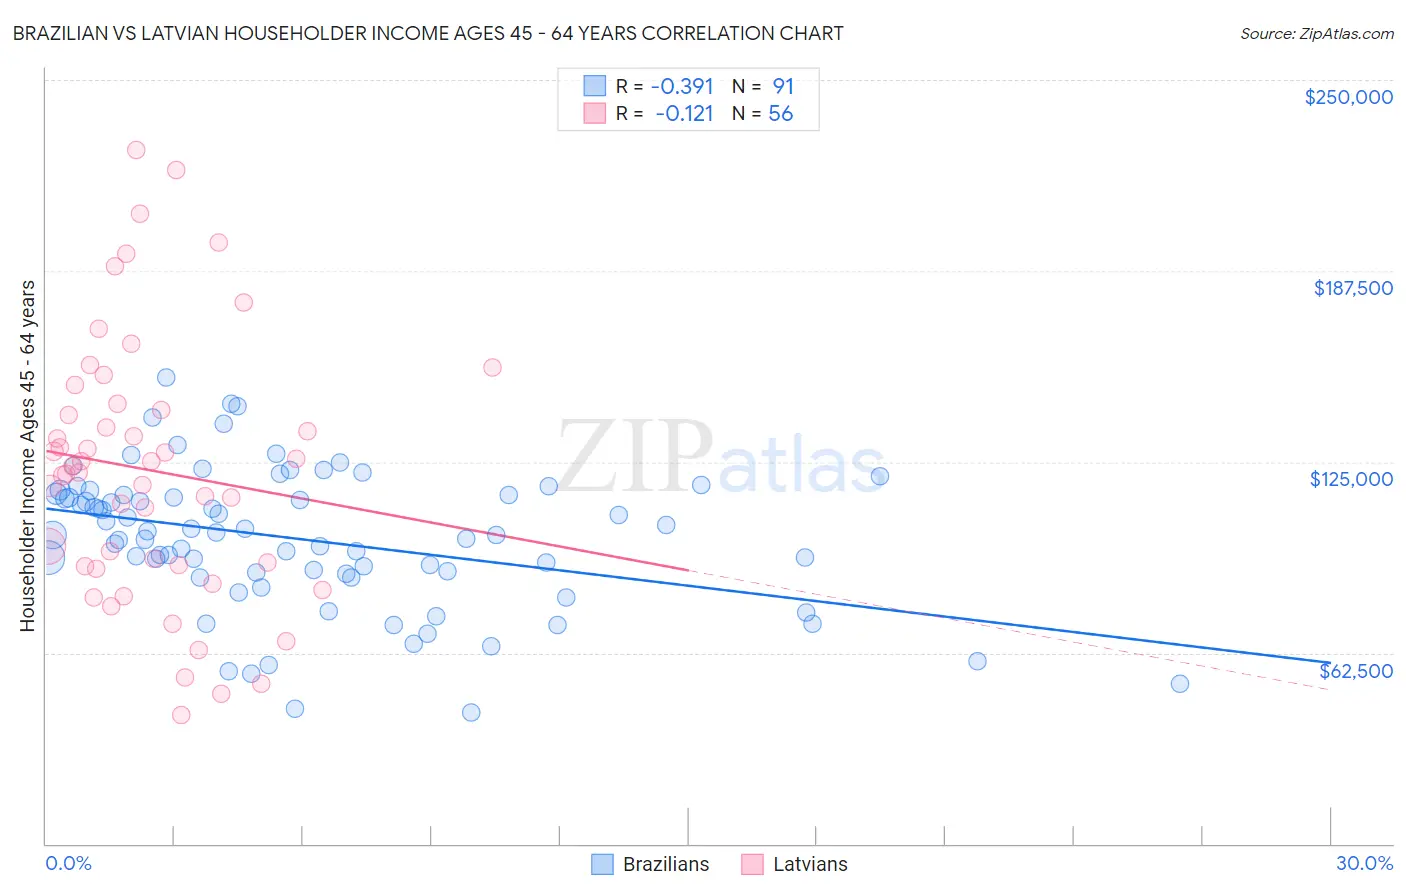 Brazilian vs Latvian Householder Income Ages 45 - 64 years